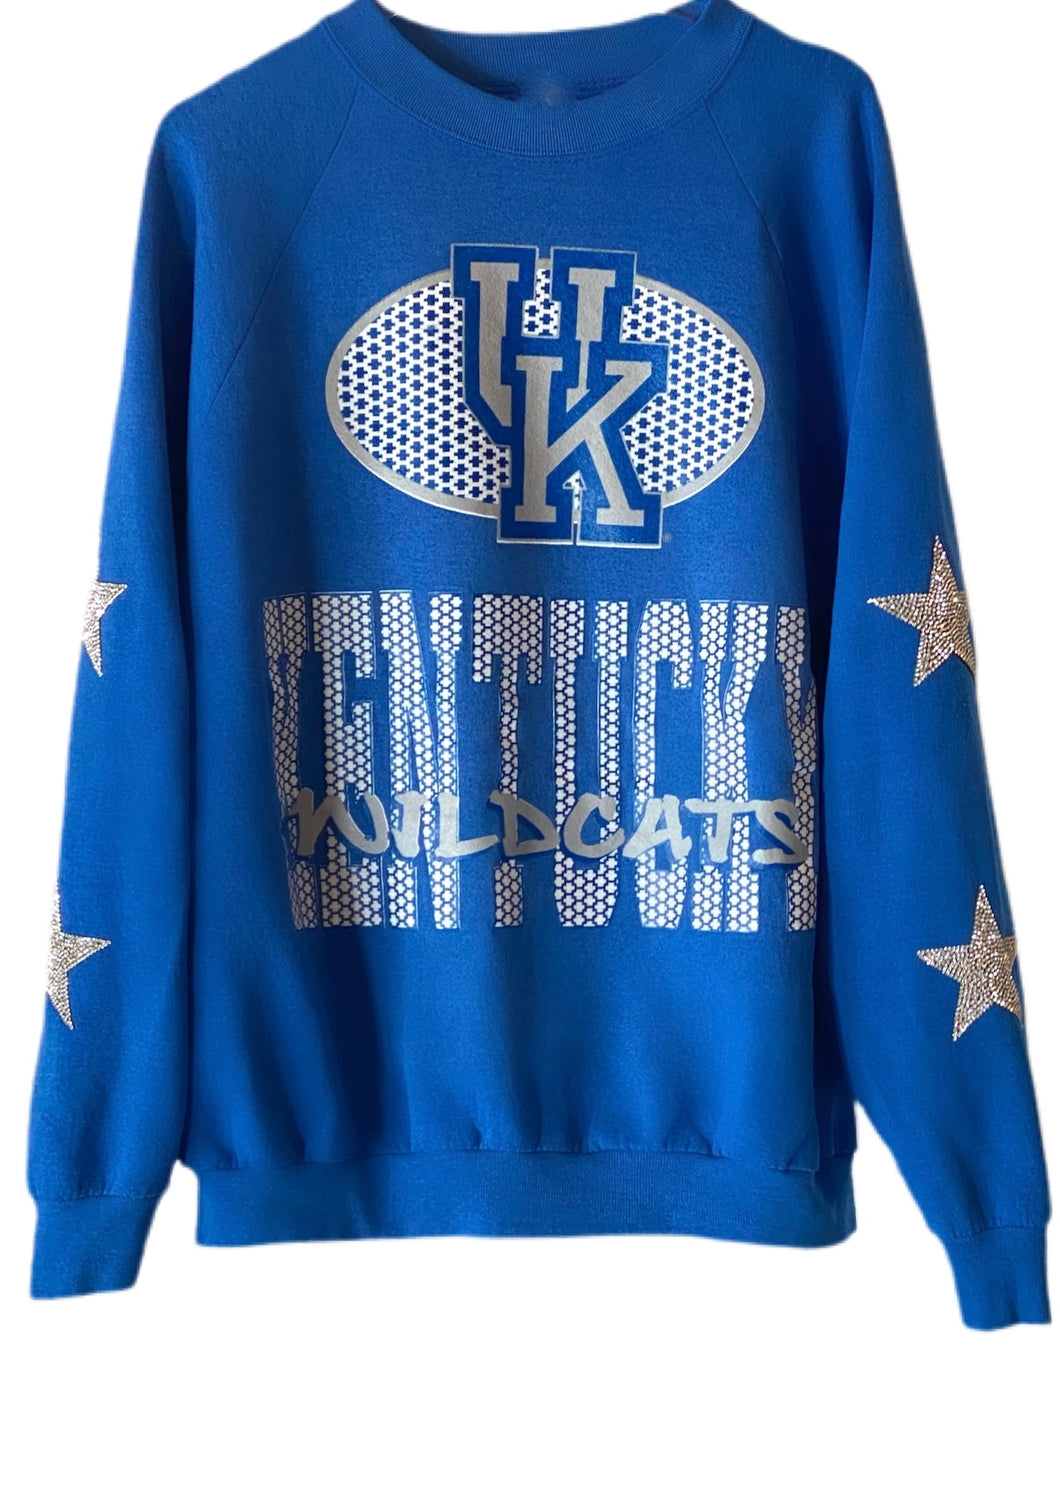 University of Kentucky, One of a KIND Vintage UK Sweatshirt with Crystal Star Design